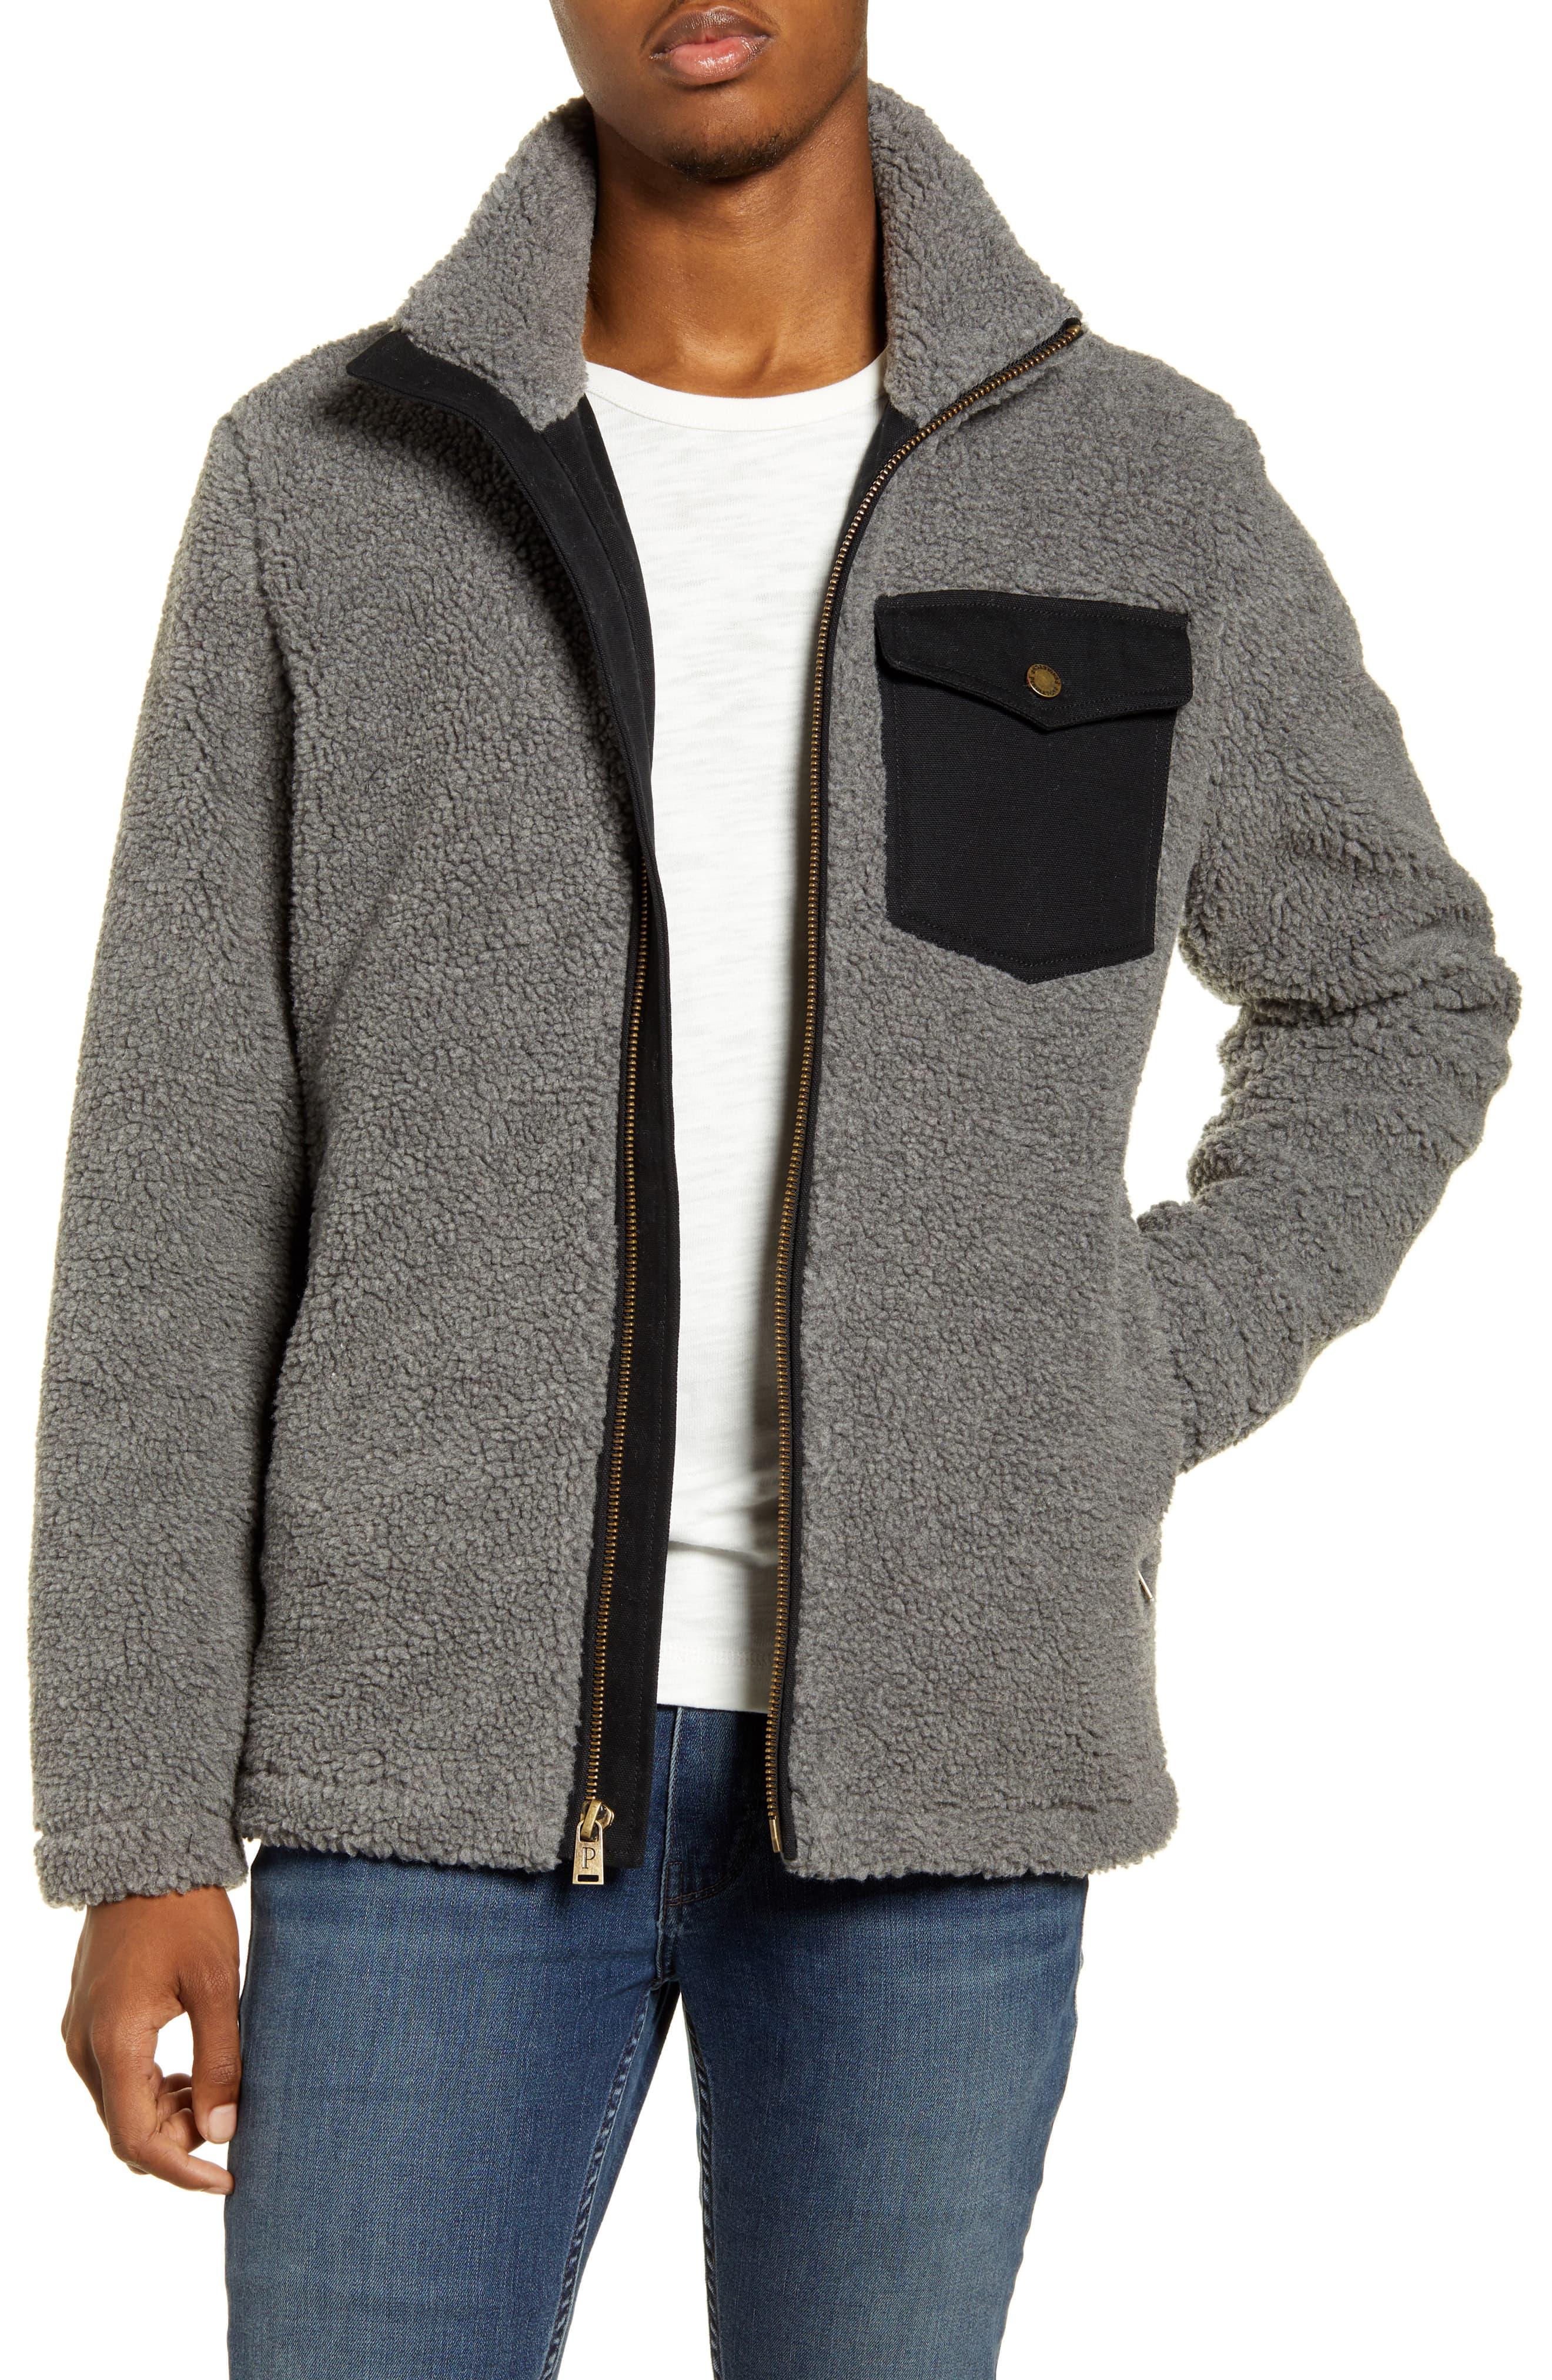 Pendleton Pendelton Riverrock Fleece Jacket in Gray for Men - Lyst